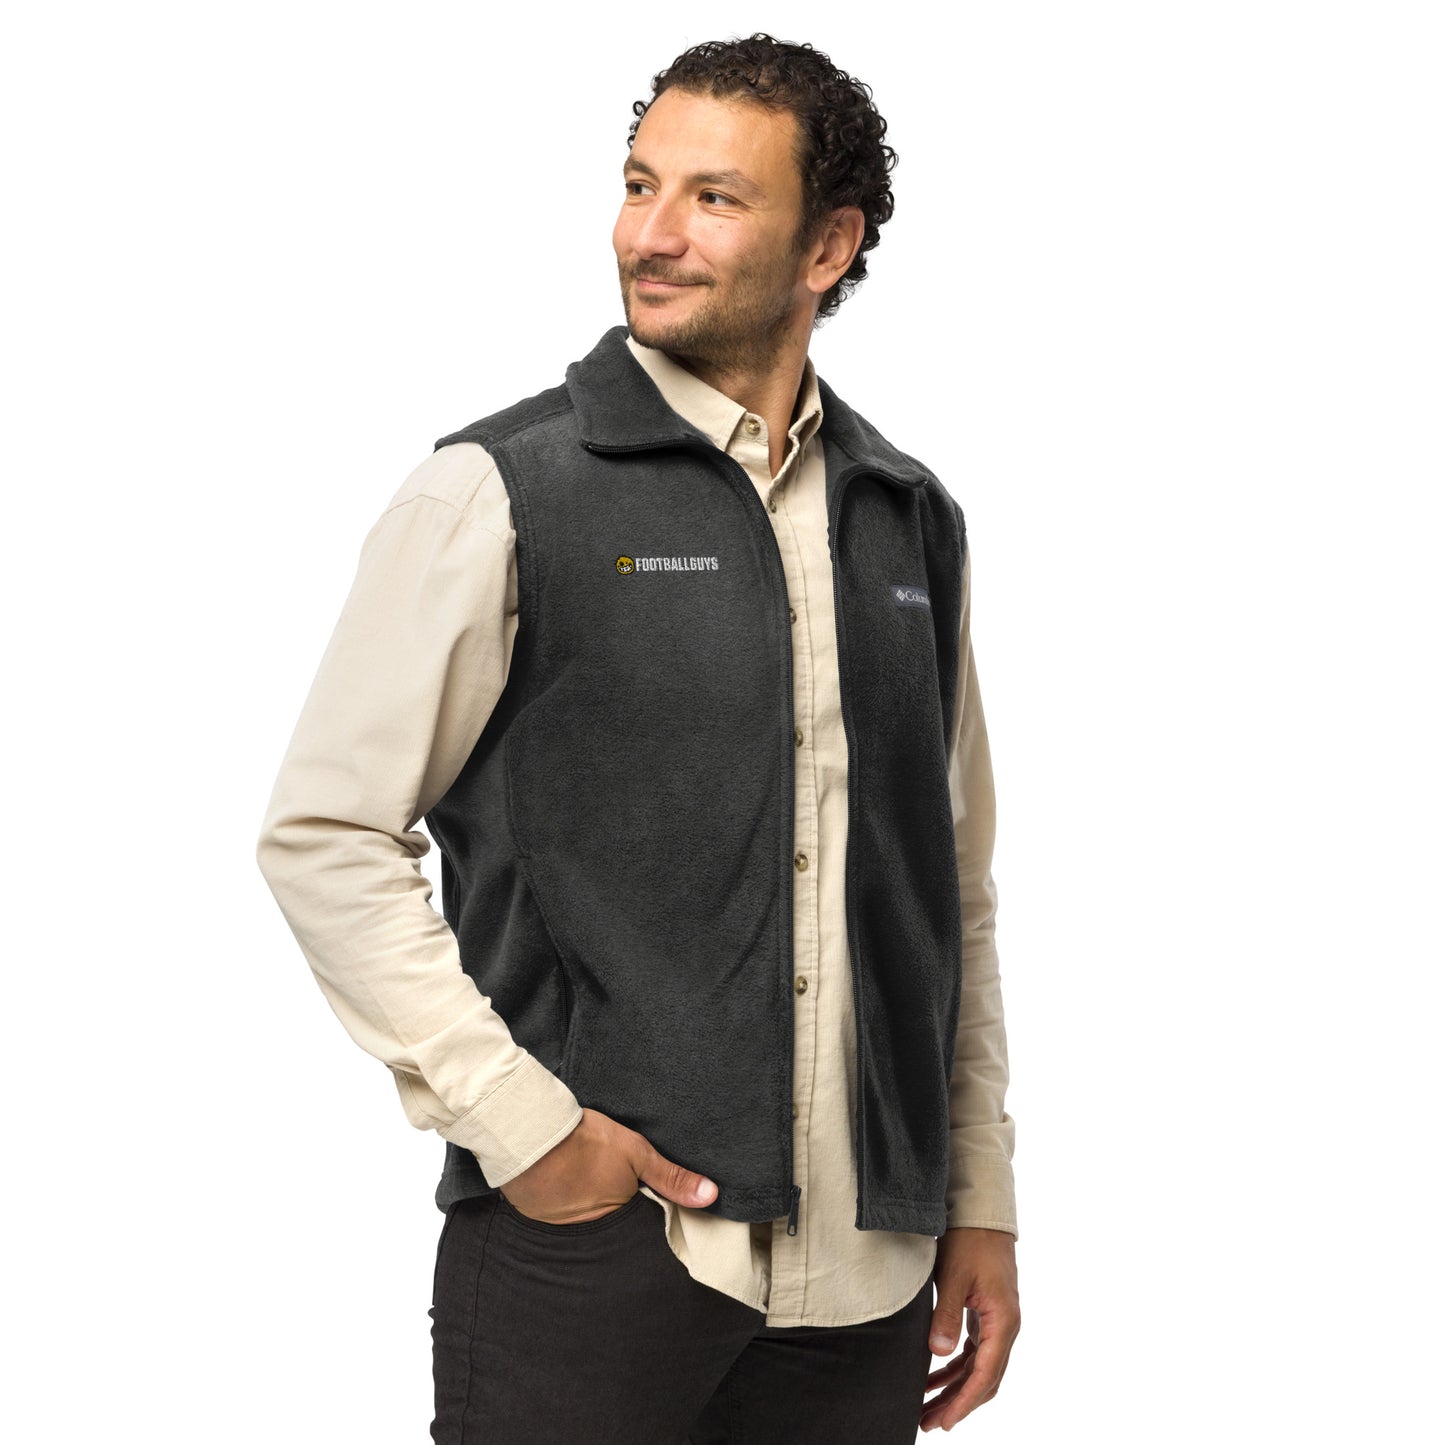 Footballguys Columbia fleece vest